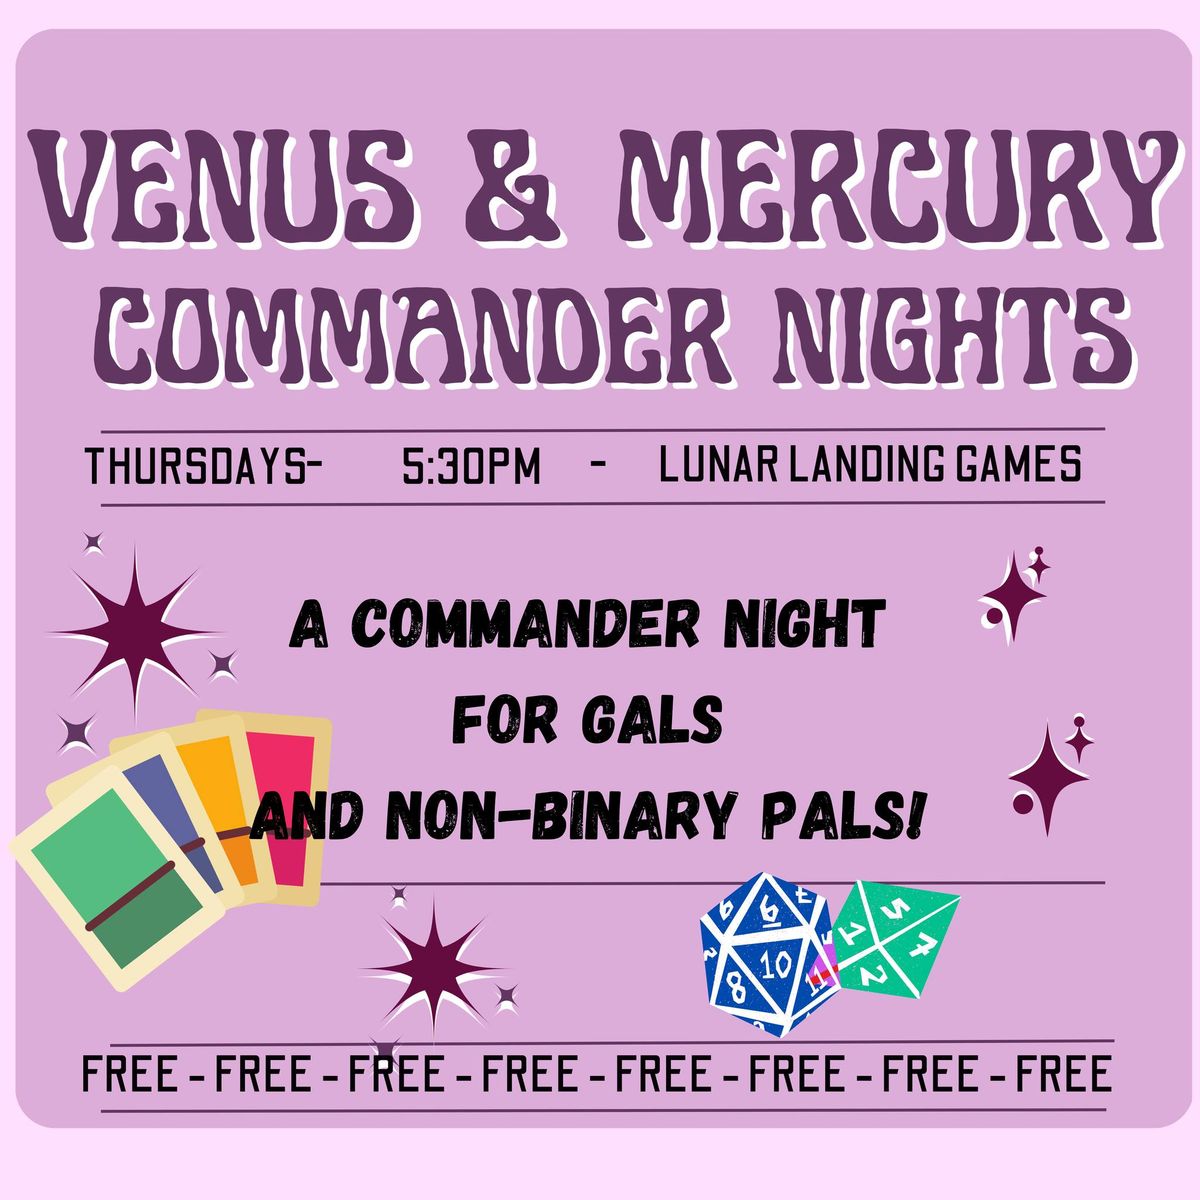 Venus & Mercury Commander Nights